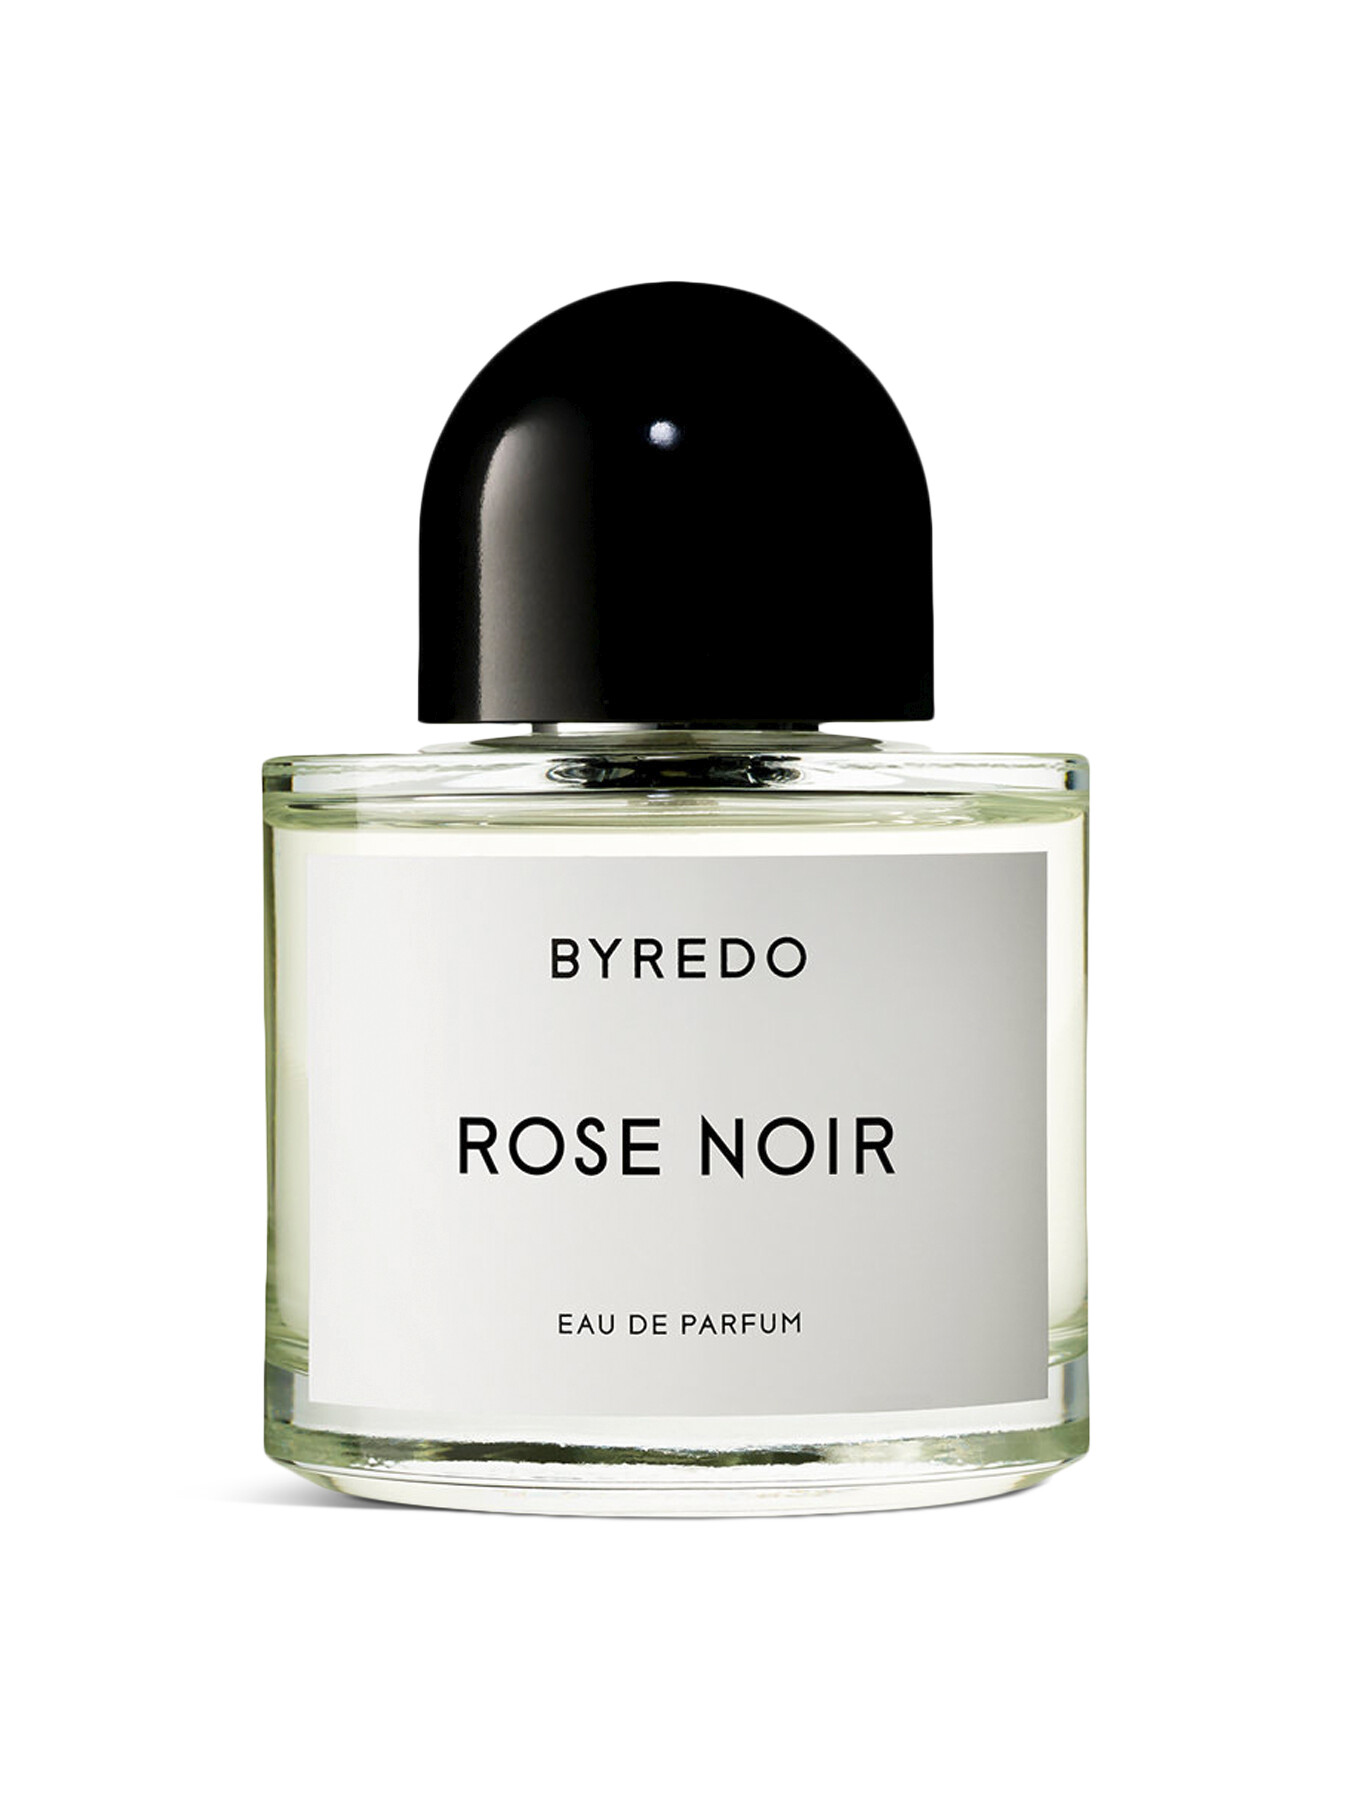 Byredo Rose Of No Man's Land Eau De Parfum 50ml